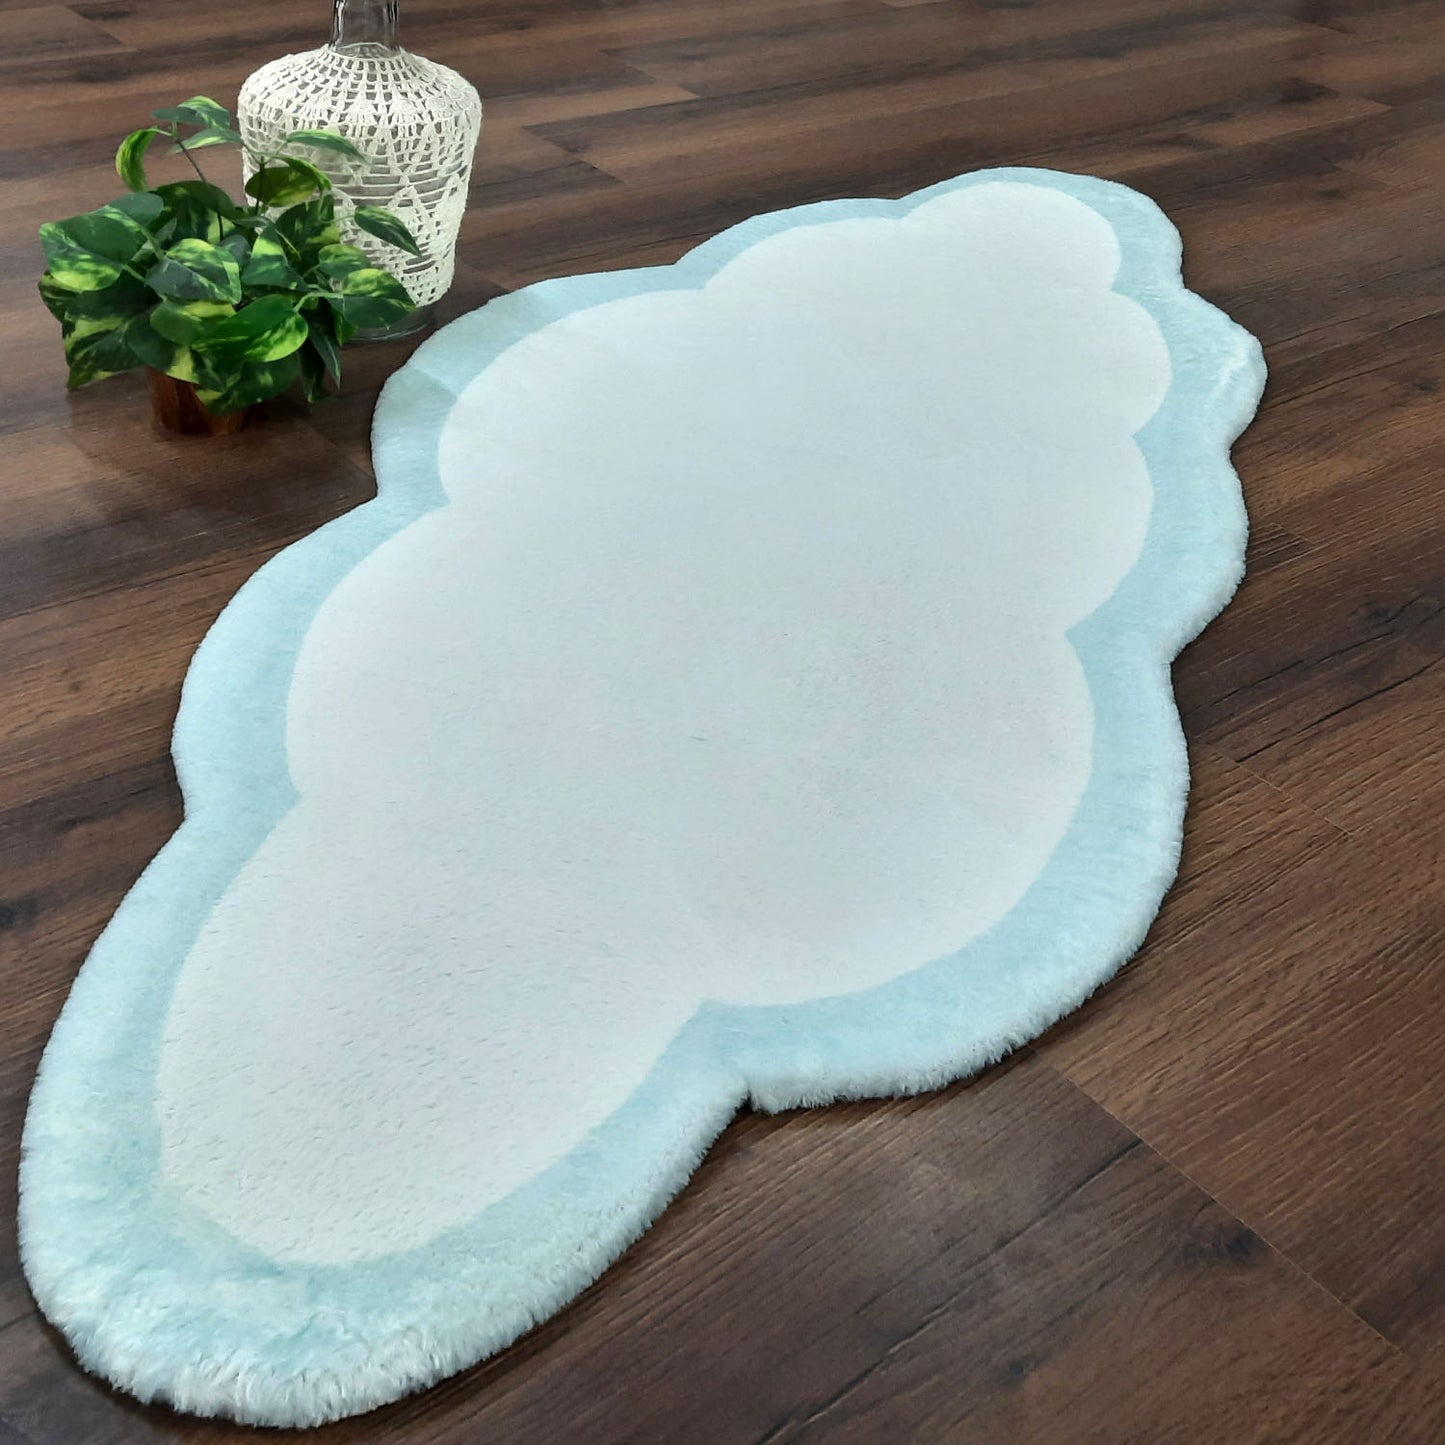 Avioni Clouds Inspired Fluffy Shag Very Soft Faux Fur Rug for Kids Nursery Play Room